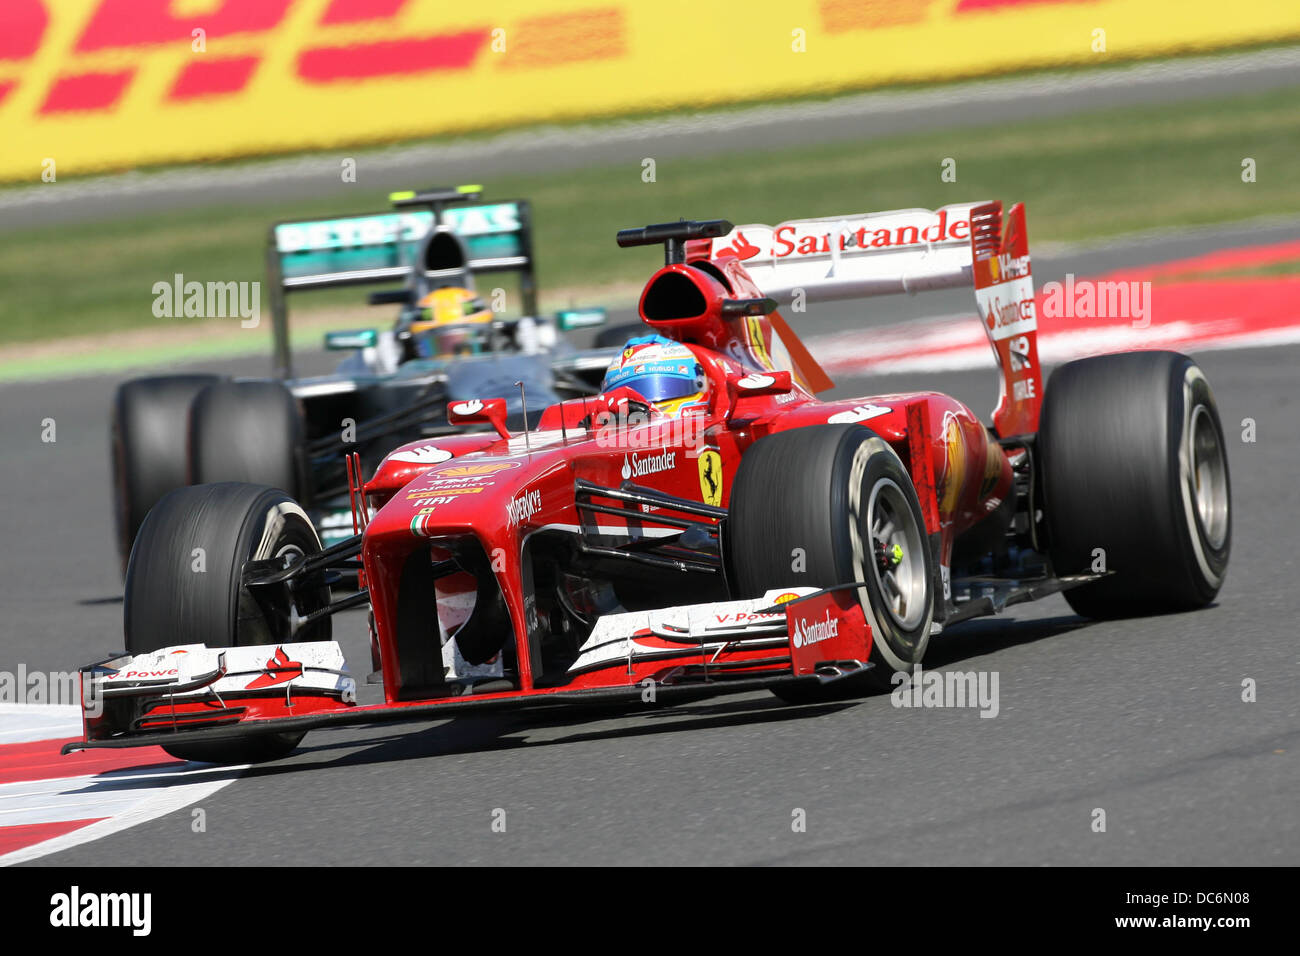 Fernando Alonso, Ferrari F1, 2013 F1 British GP, Silverstone. Stock Photo